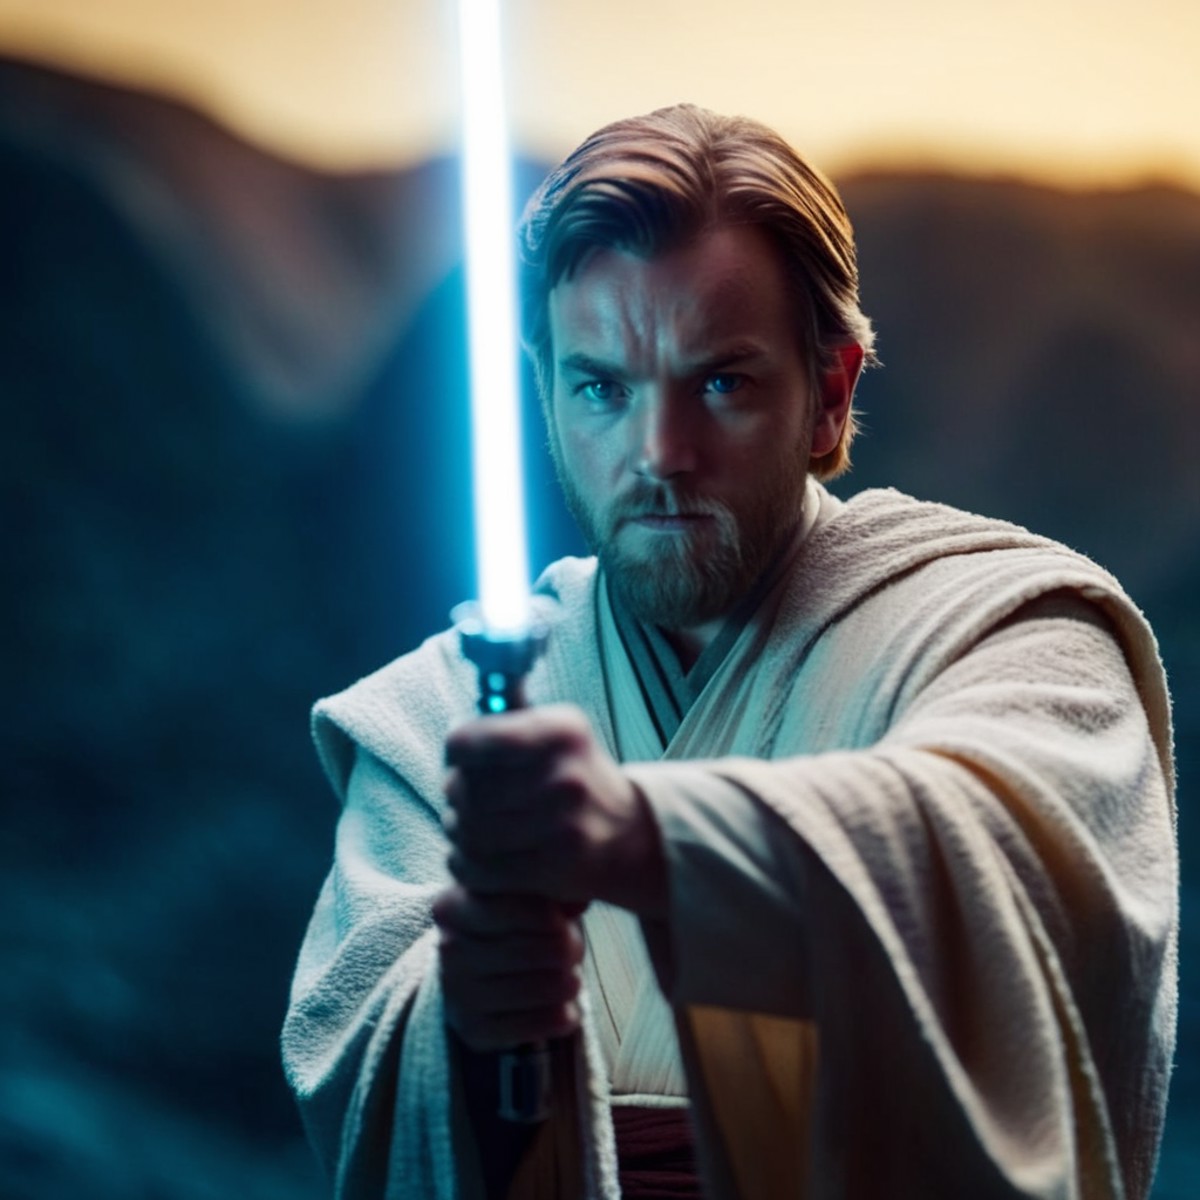 cinematic film still of  <lora:Obi-Wan Kenobi:1.2>
Obi-Wan Kenobi a young man in a robe holding a light saber in star wars...